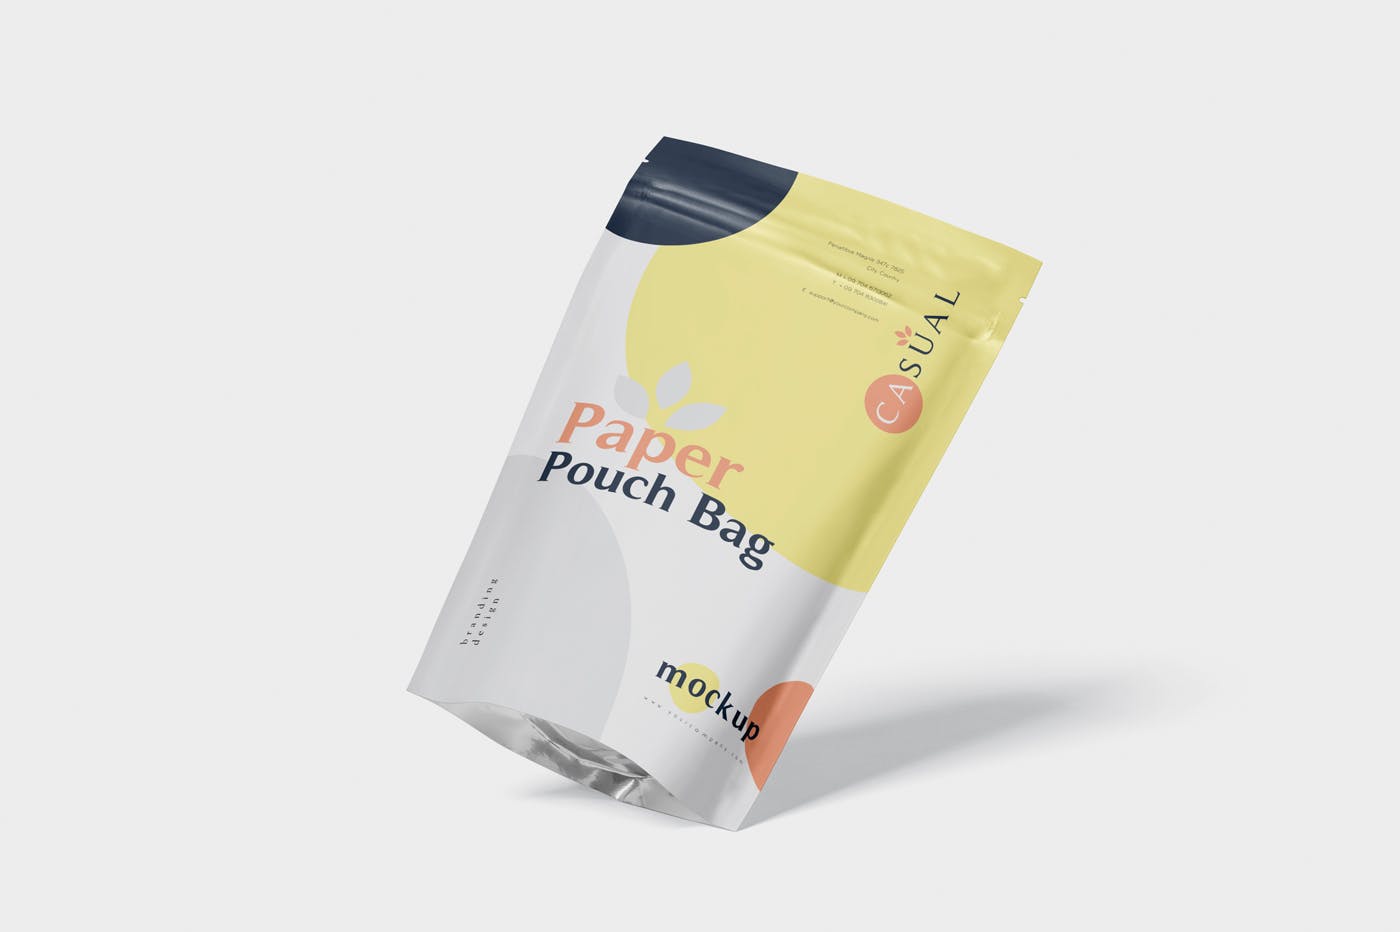 食品自封袋包装设计效果图非凡图库精选 Paper Pouch Bag Mockup – Large Size插图(4)